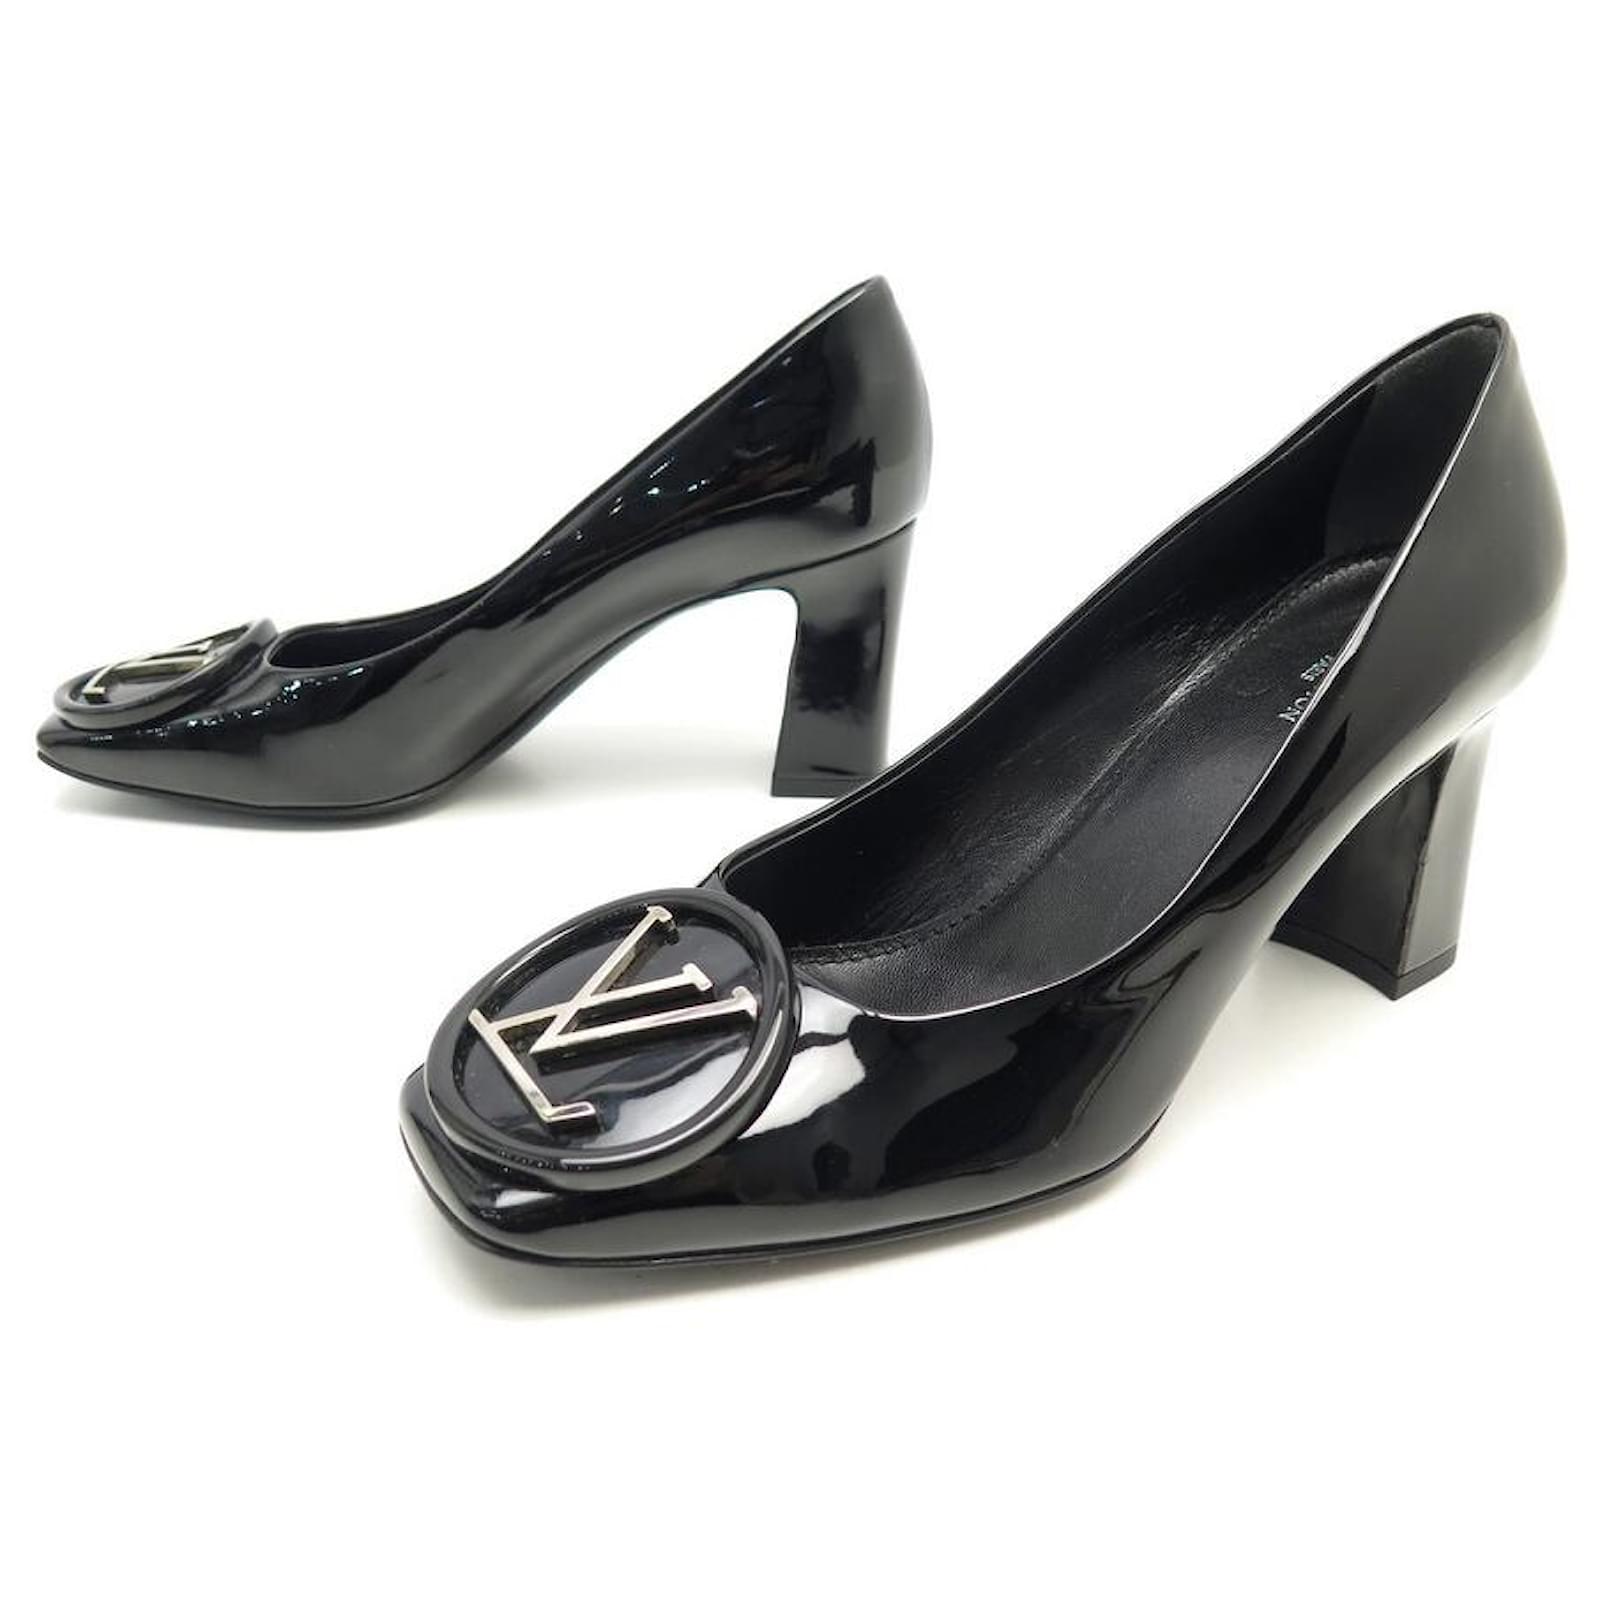 LOUIS VUITTON heels 36-6 black white pumps LEATHER $1200 ITALY LV logos